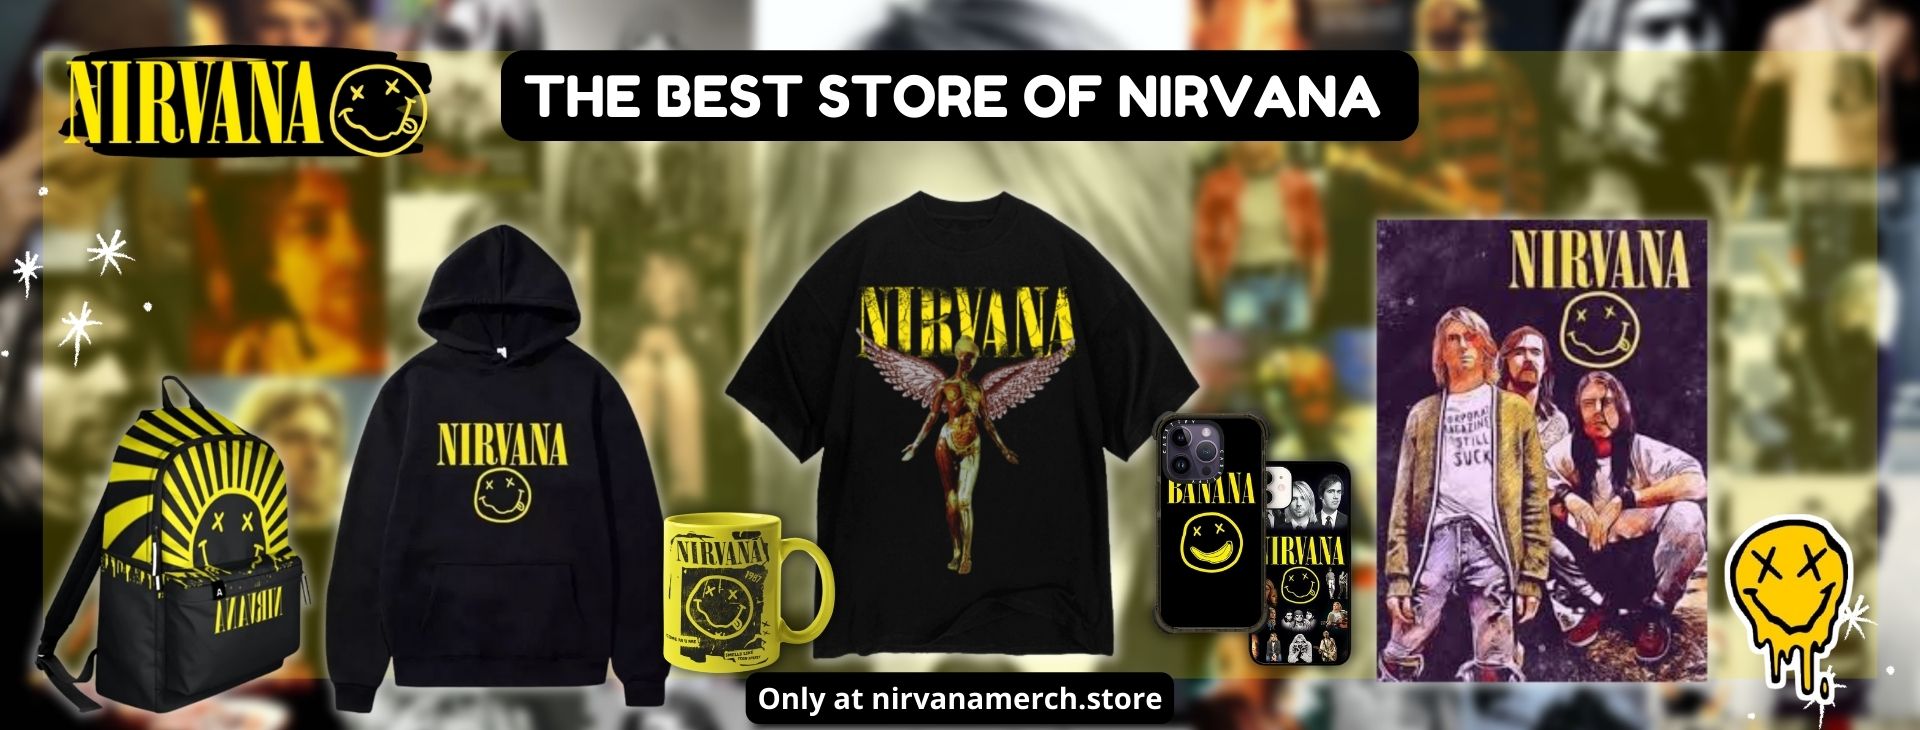 Nirvana Banner - Nirvana Store